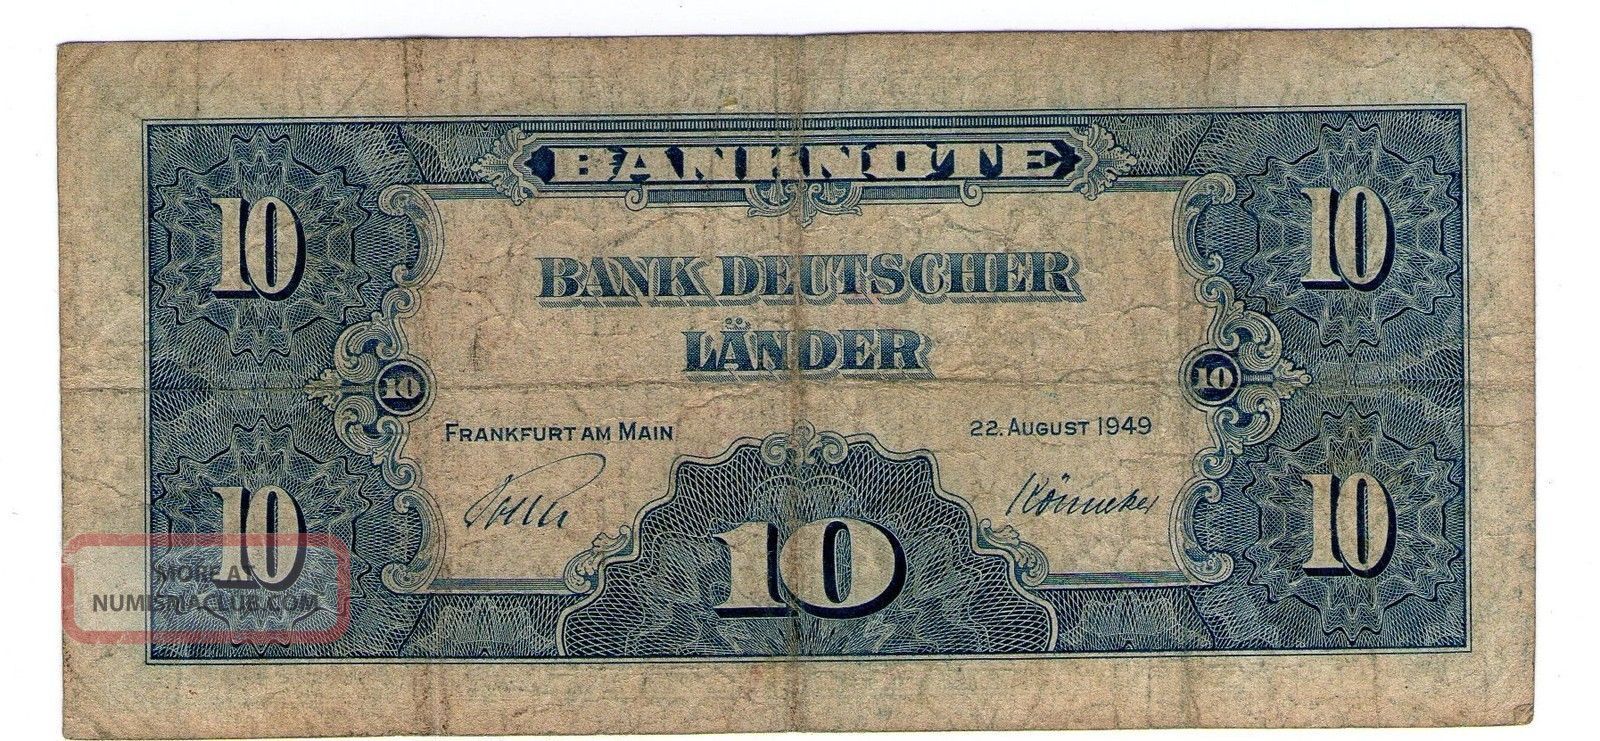 Germany Federal Rep. Note 10 Deutschemark 1949 P 16a